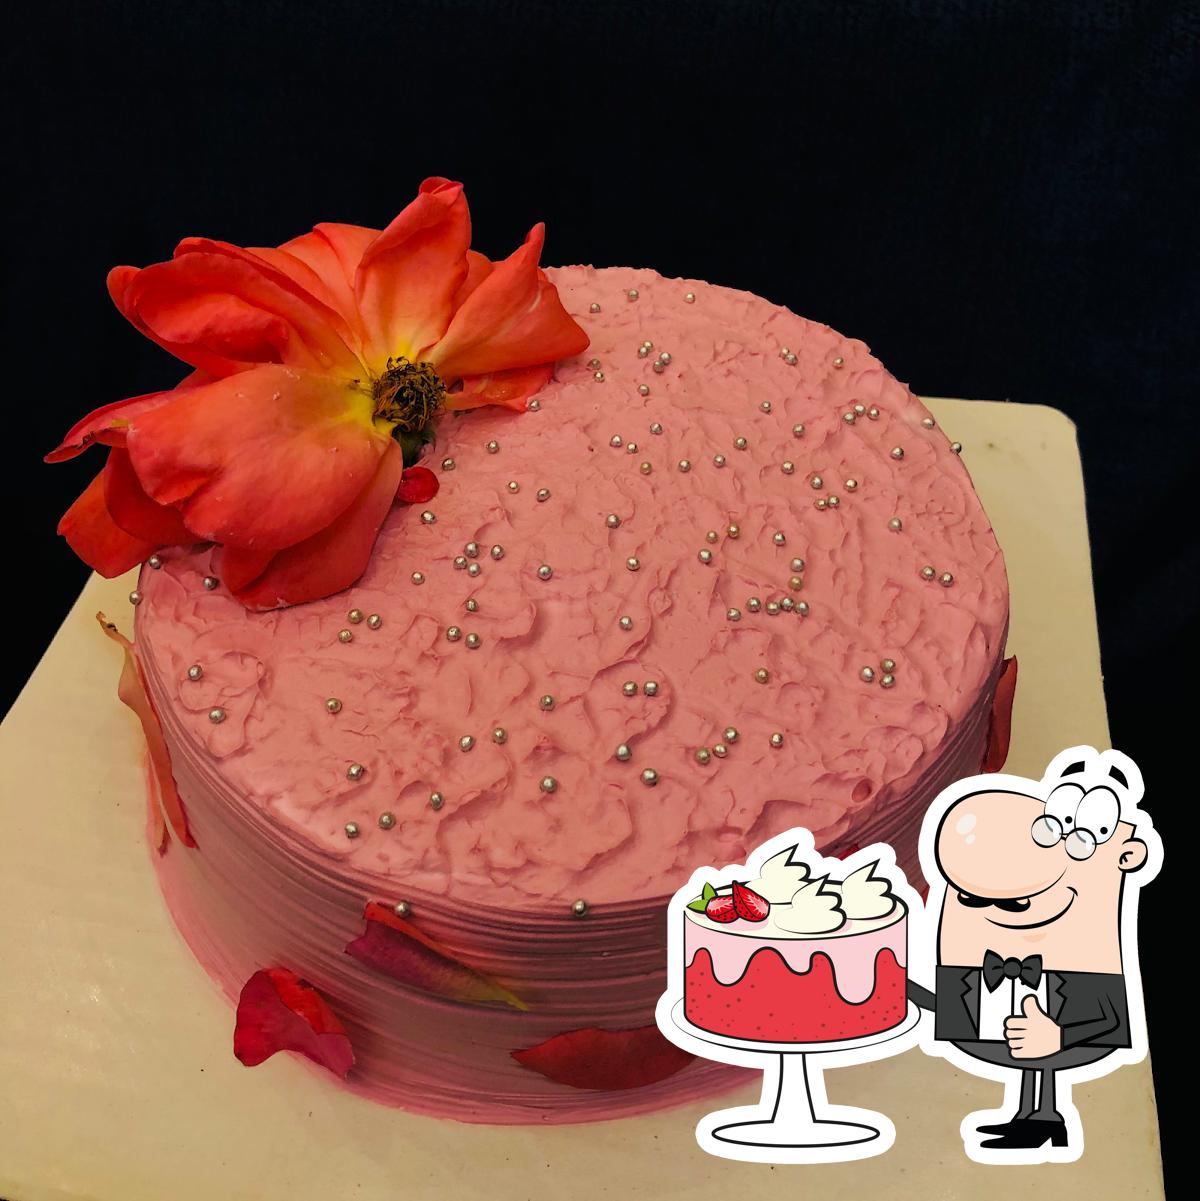 Happy Day (creative cake art) - Dindigul - Bakery